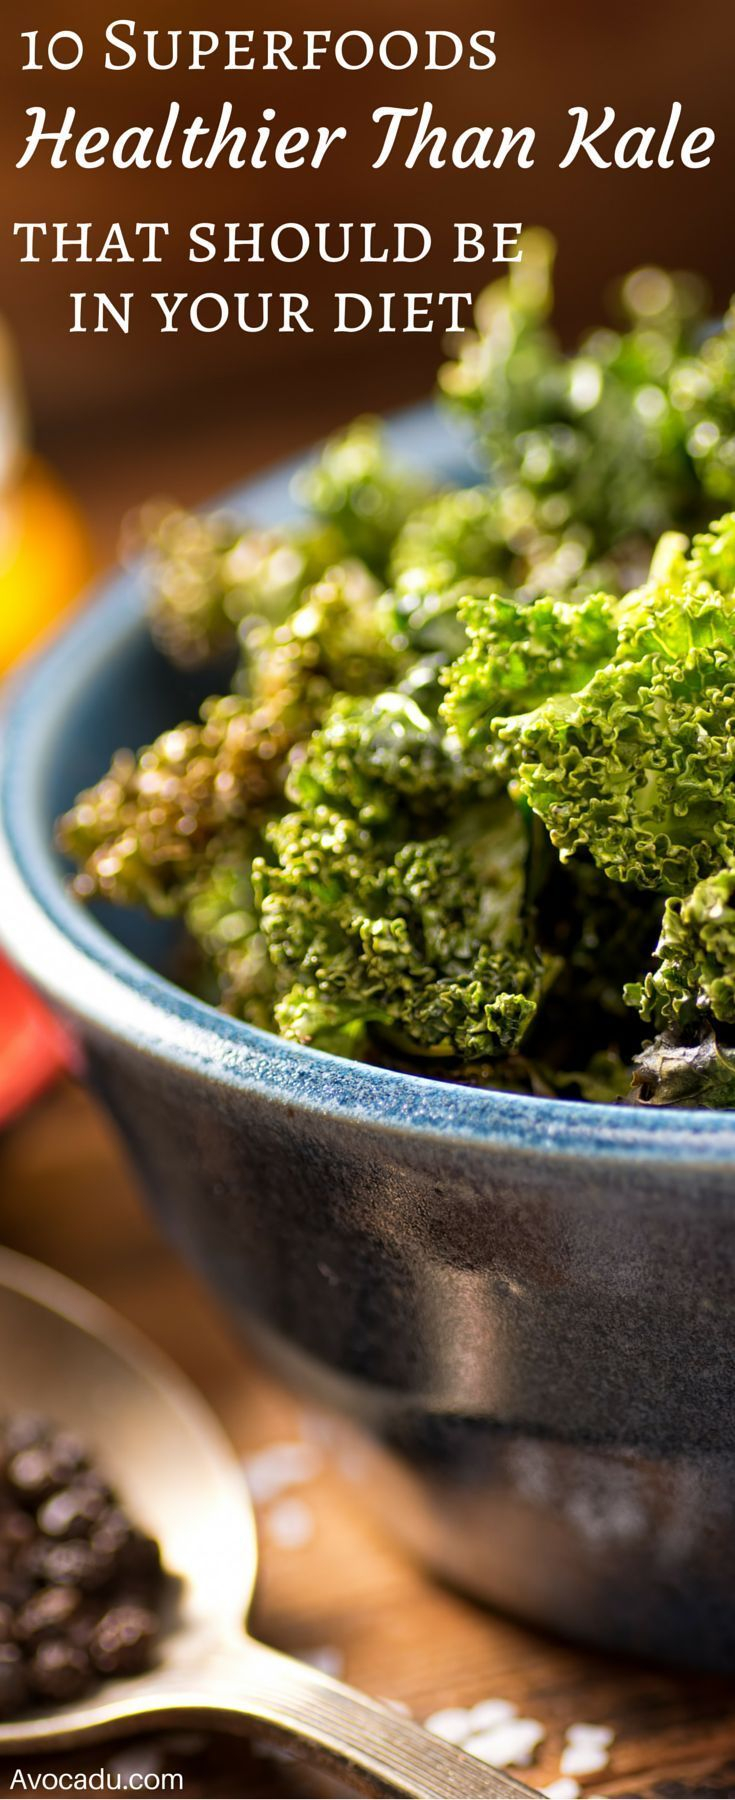 10 Superfoods Healthier Than Kale Avocadu Healthy Diet 